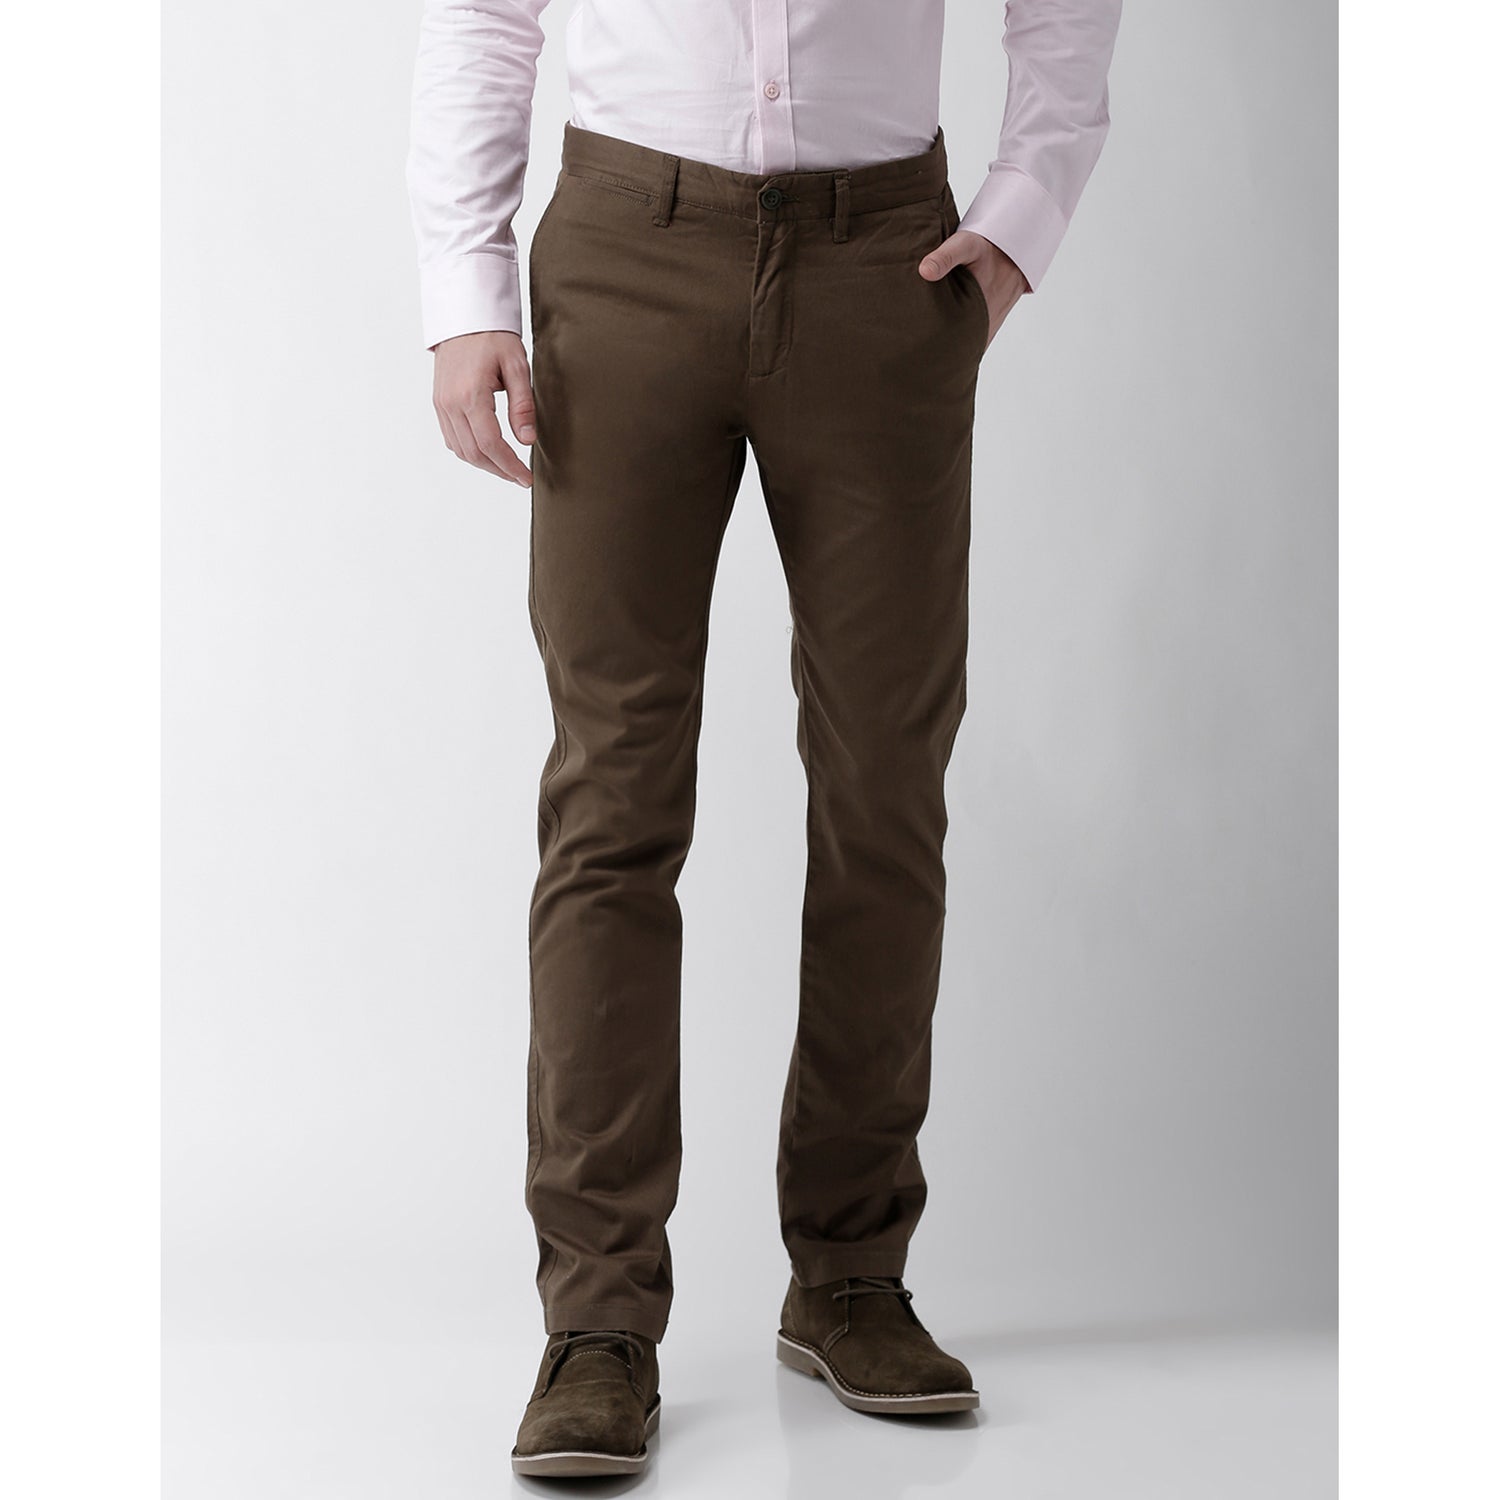 Celio Slim Fit Men Beige Trousers  Buy Celio Slim Fit Men Beige Trousers  Online at Best Prices in India  Flipkartcom